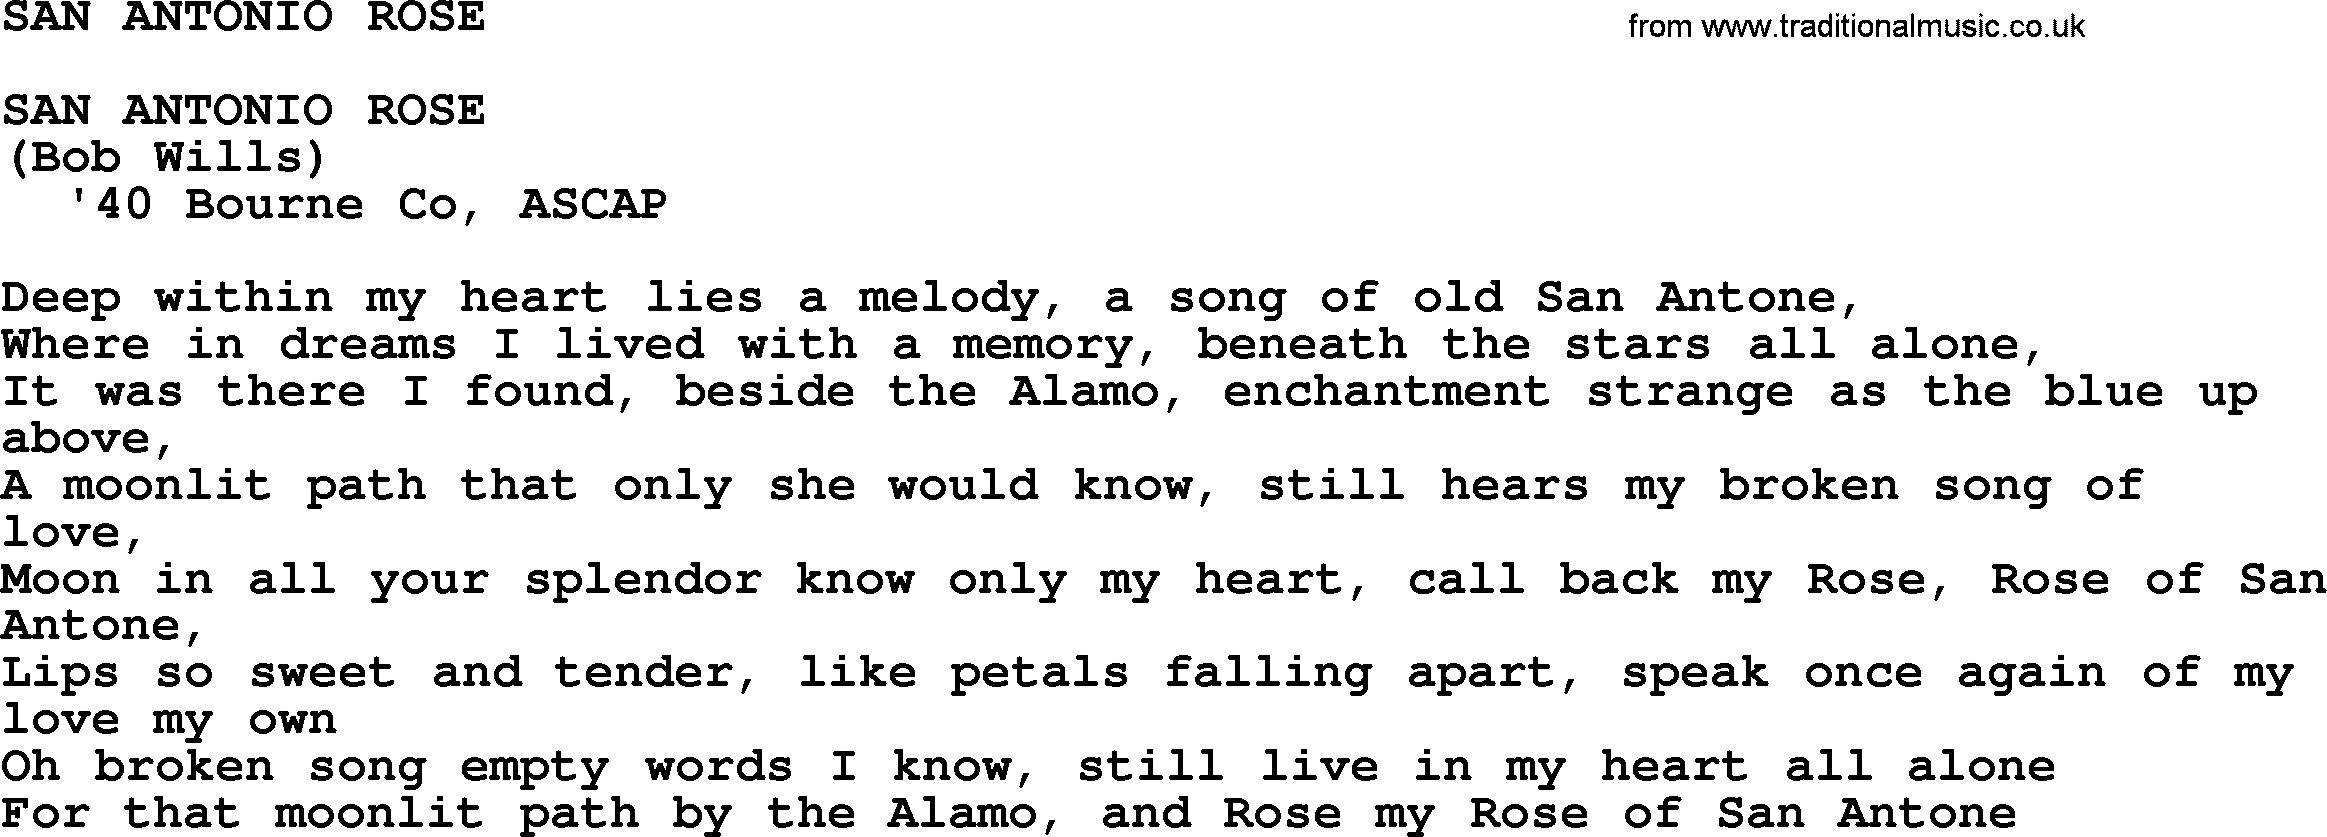 Merle Haggard song: San Antonio Rose, lyrics.